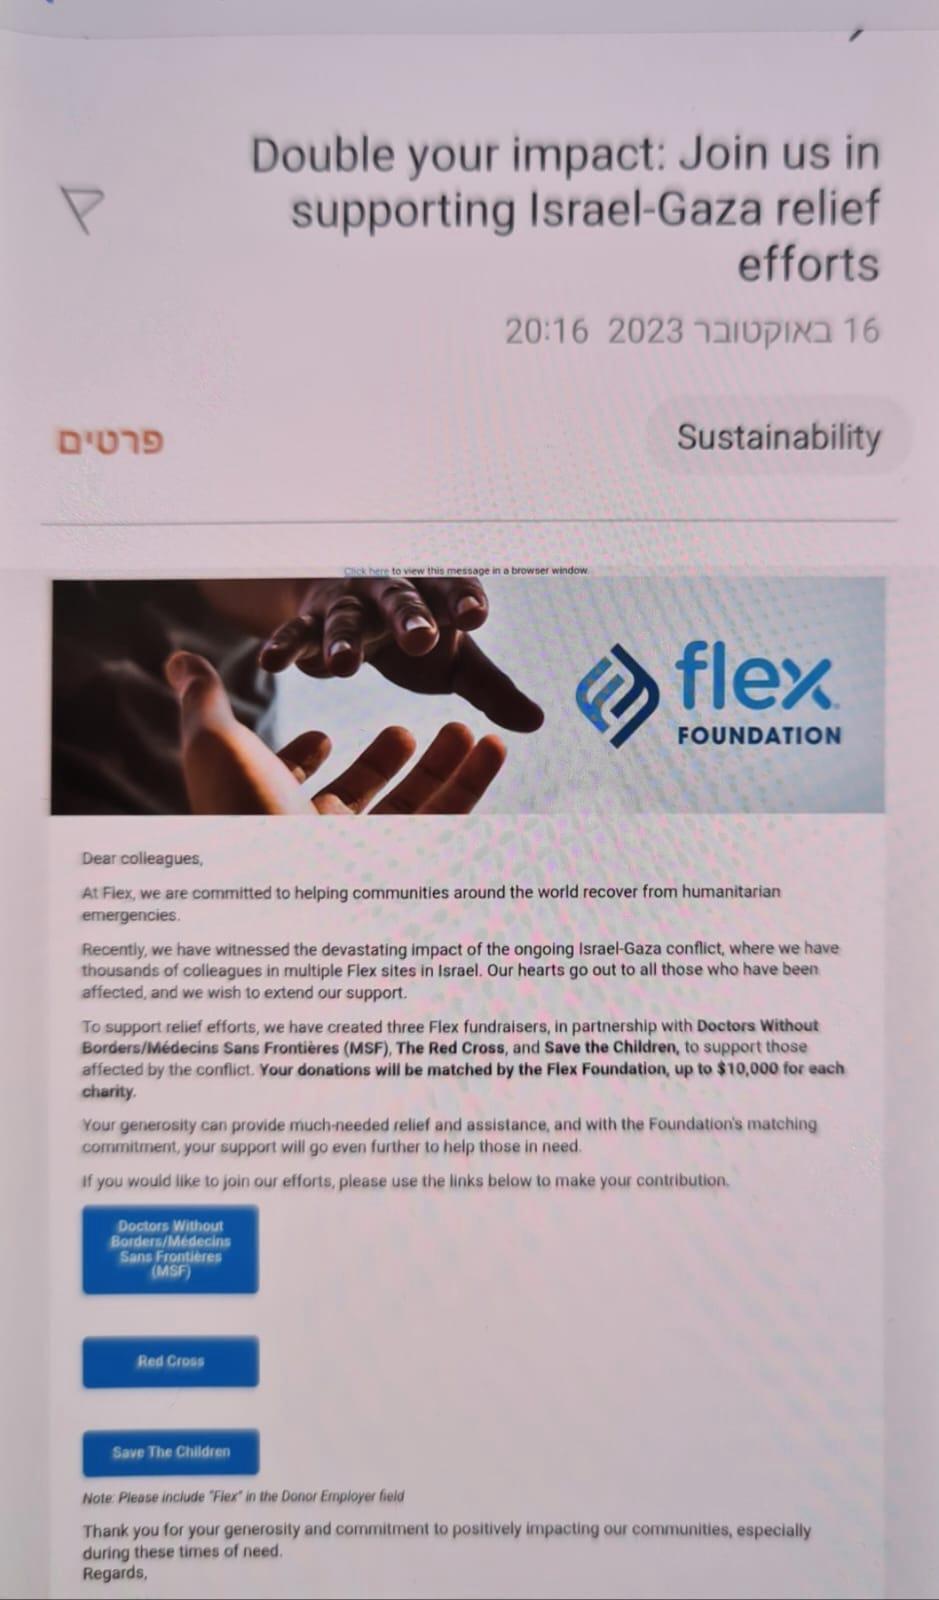 The Flex Co.